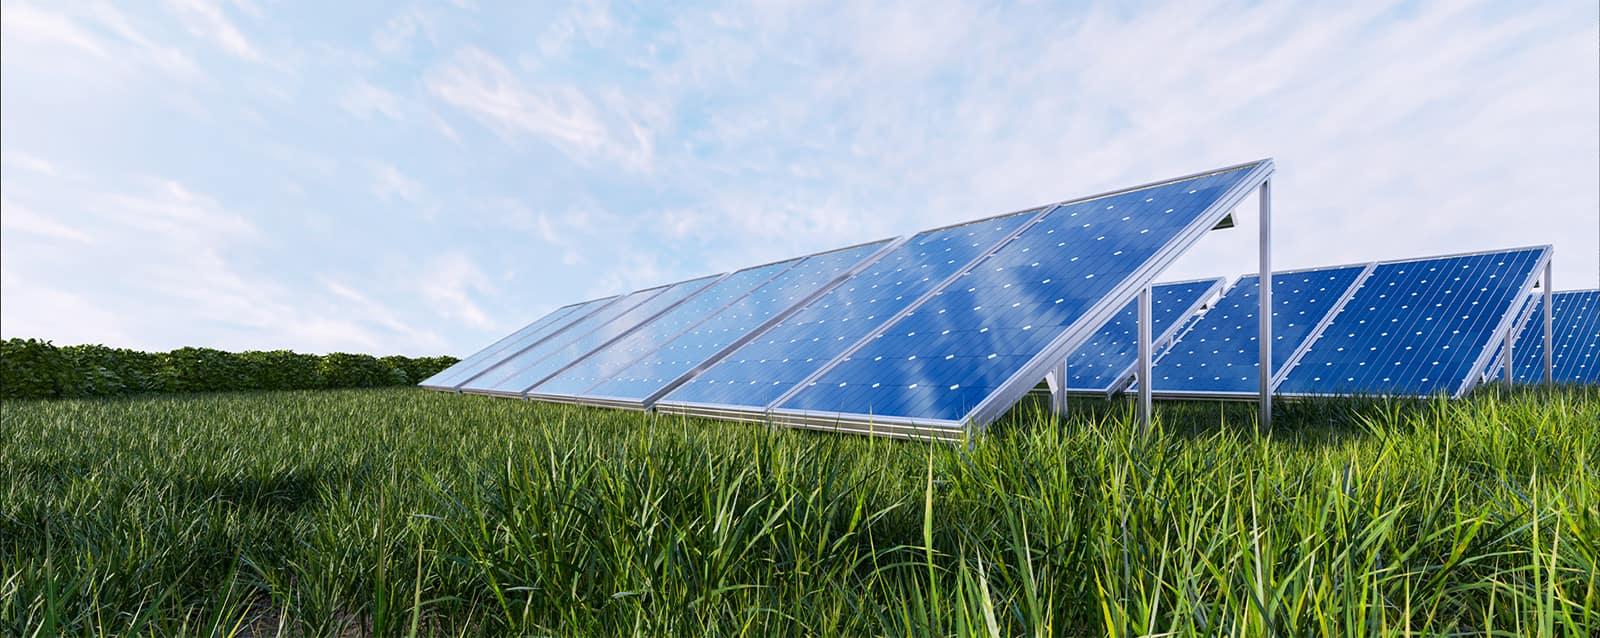 Solar Power Technology